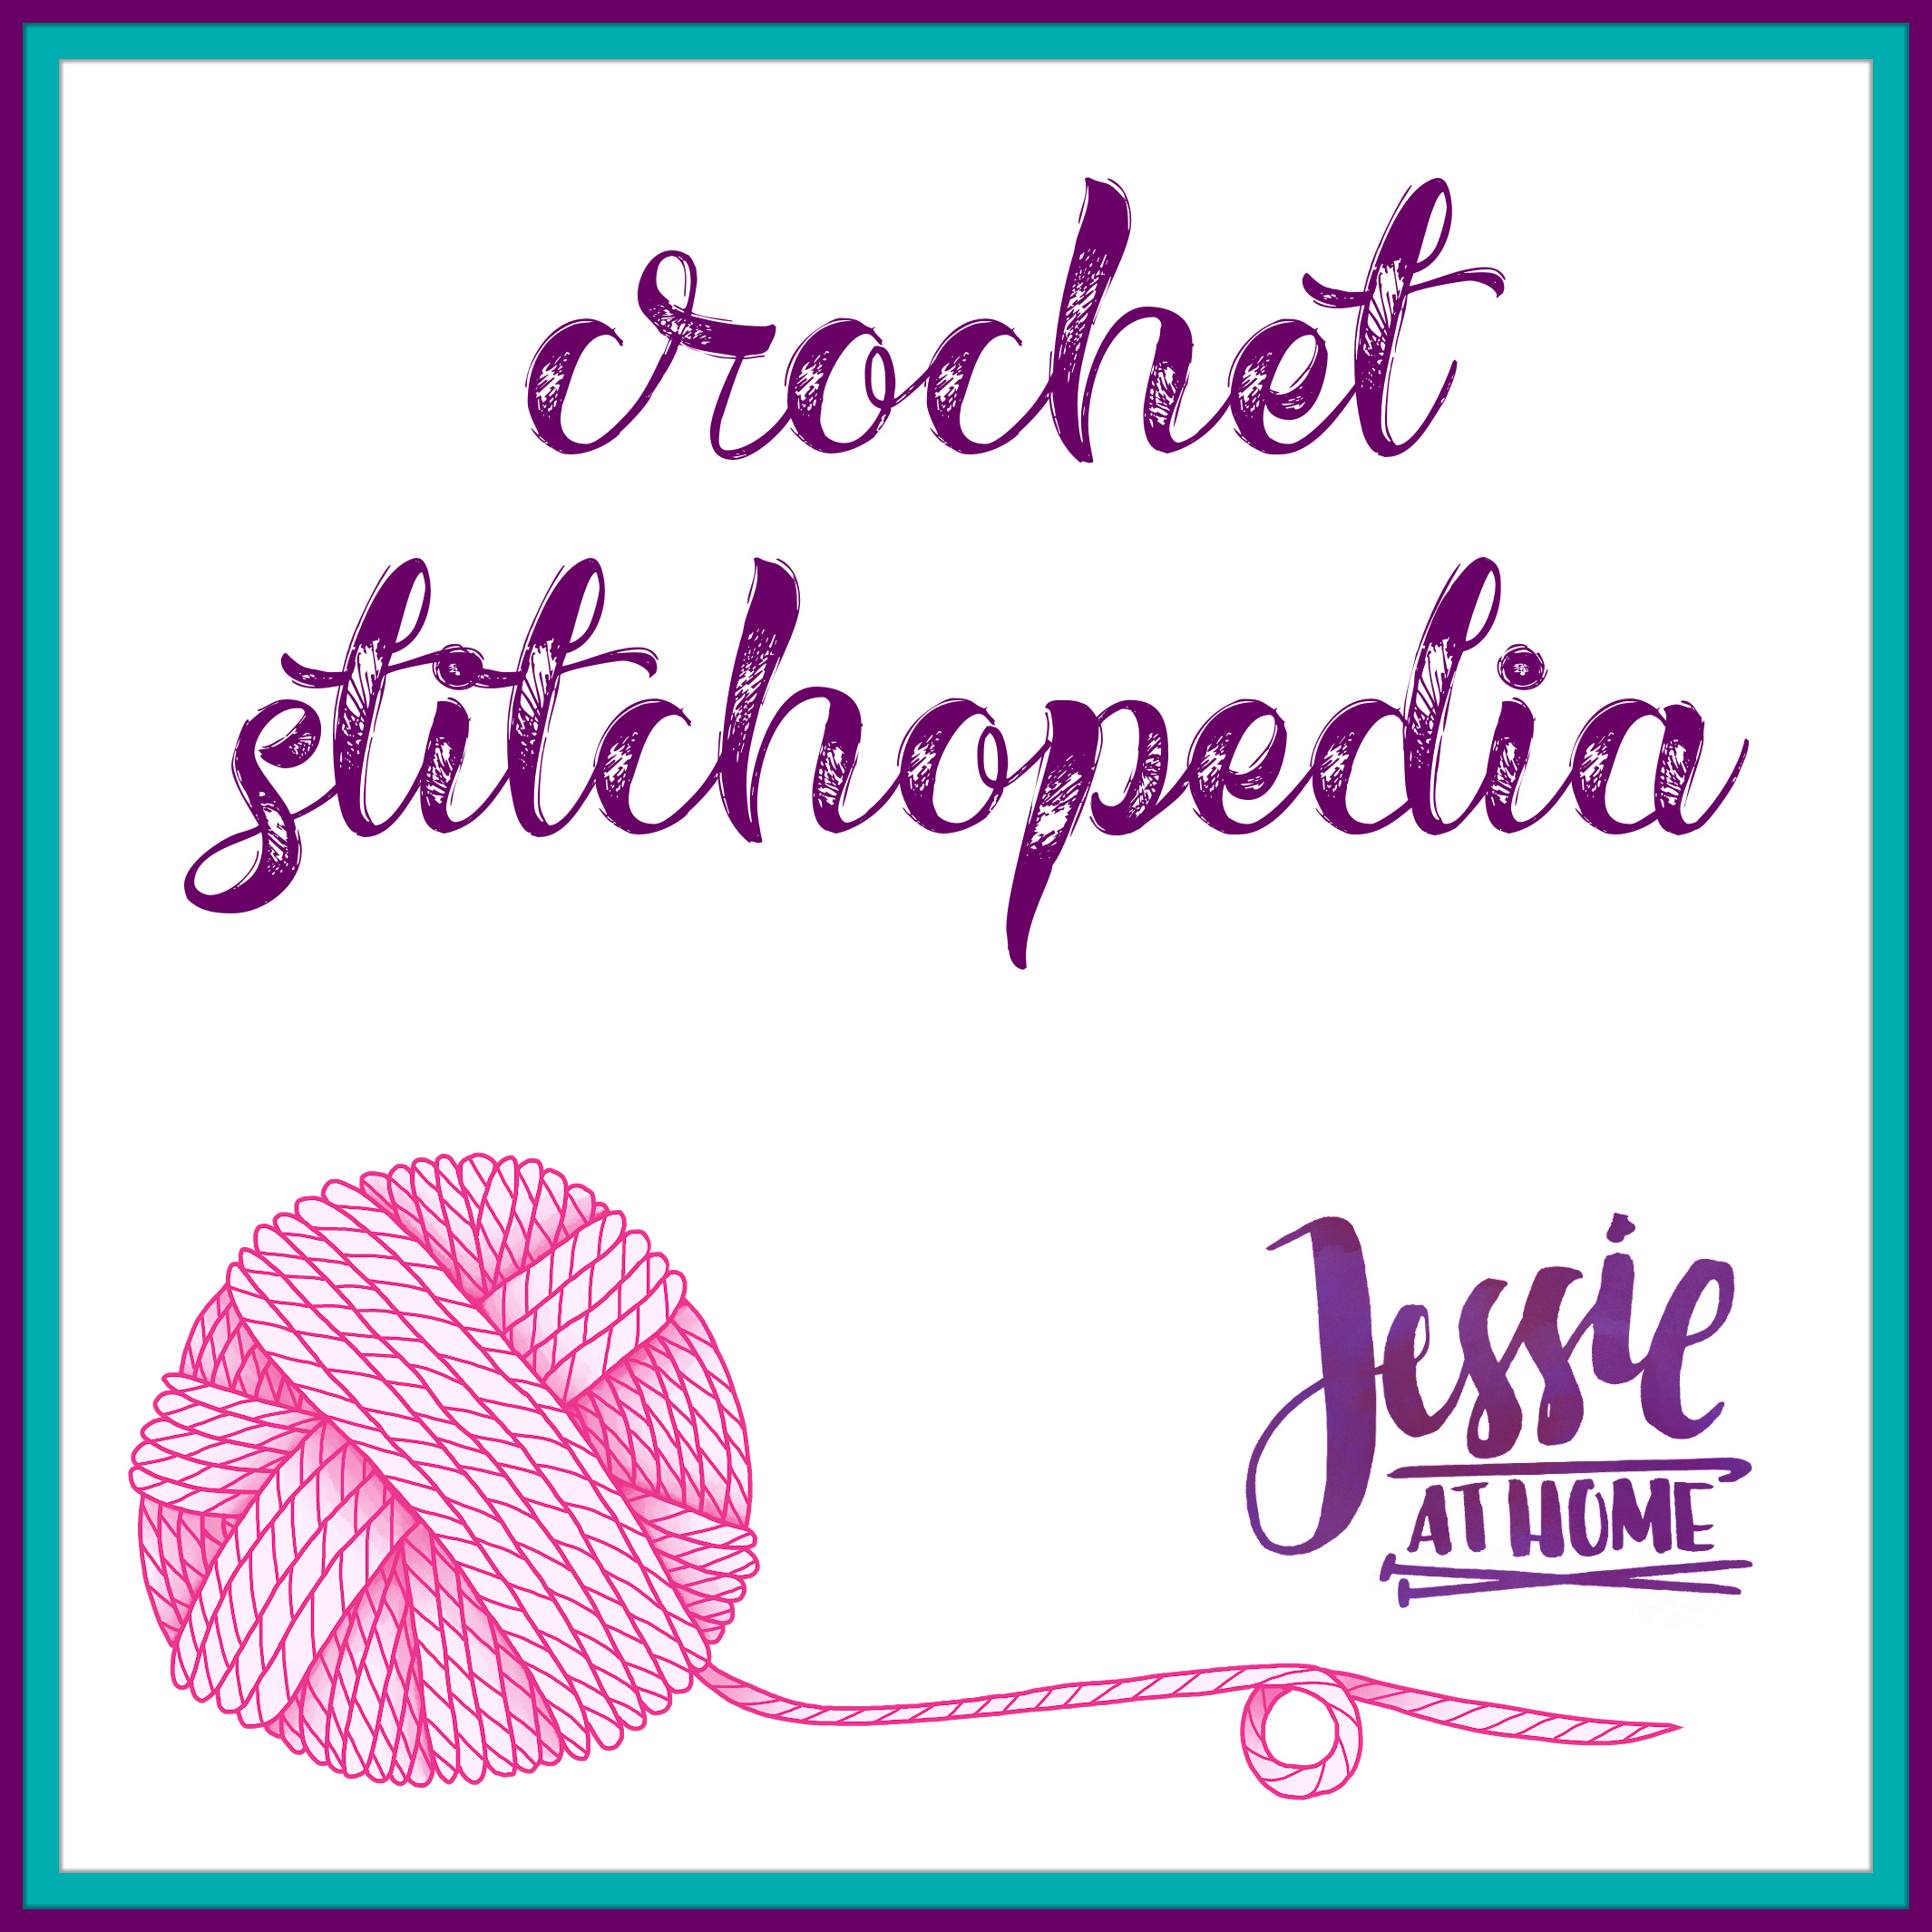 Crochet Stitchopedia Menu on Jessie At Home